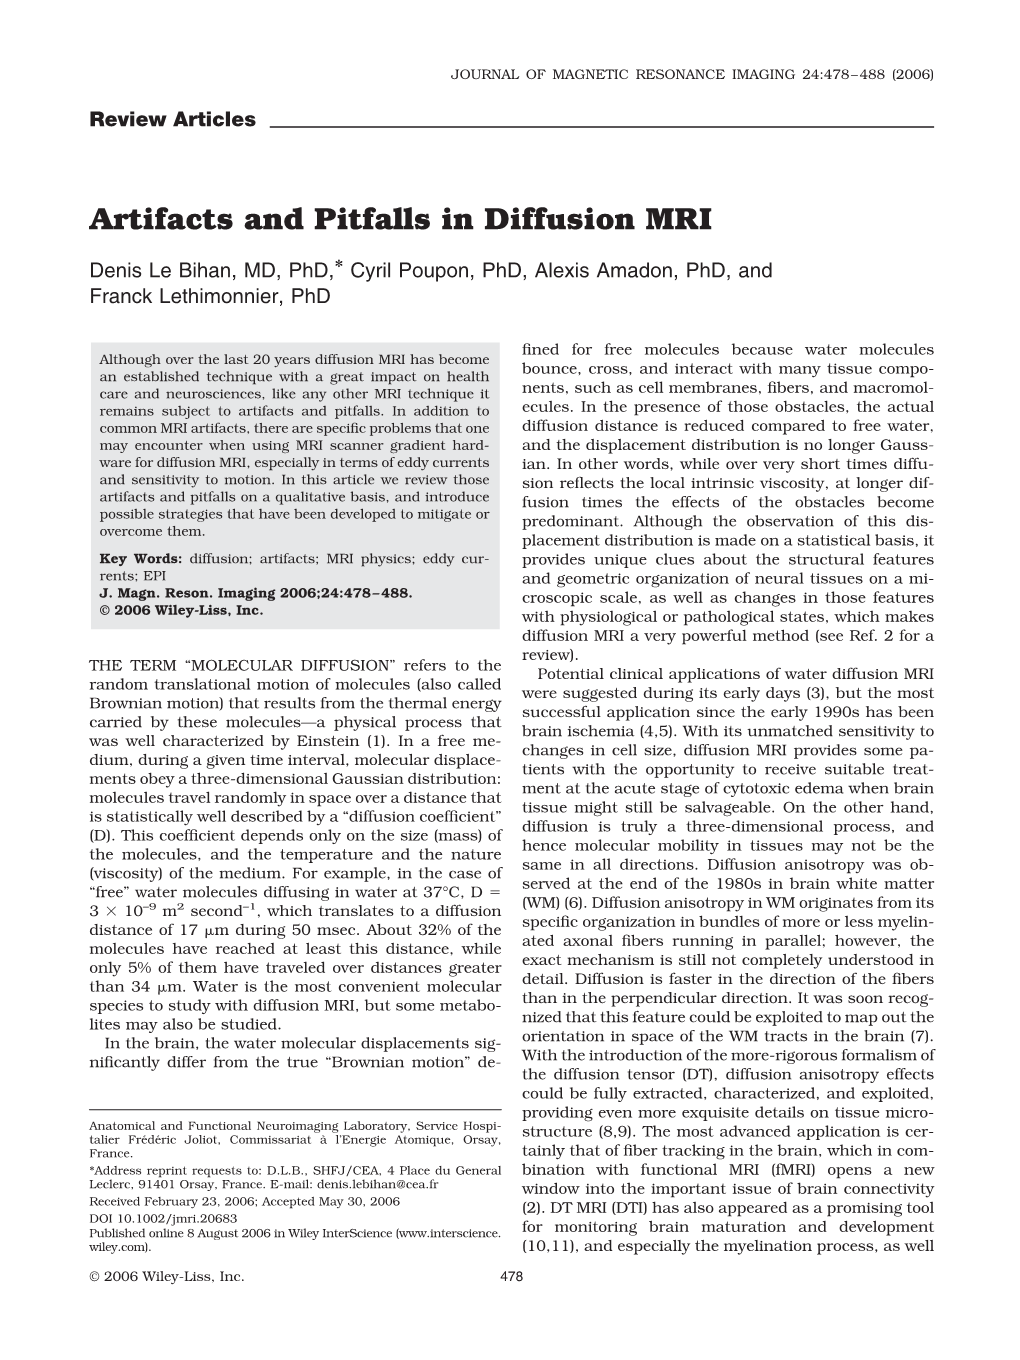 Artifacts and Pitfalls in Diffusion MRI